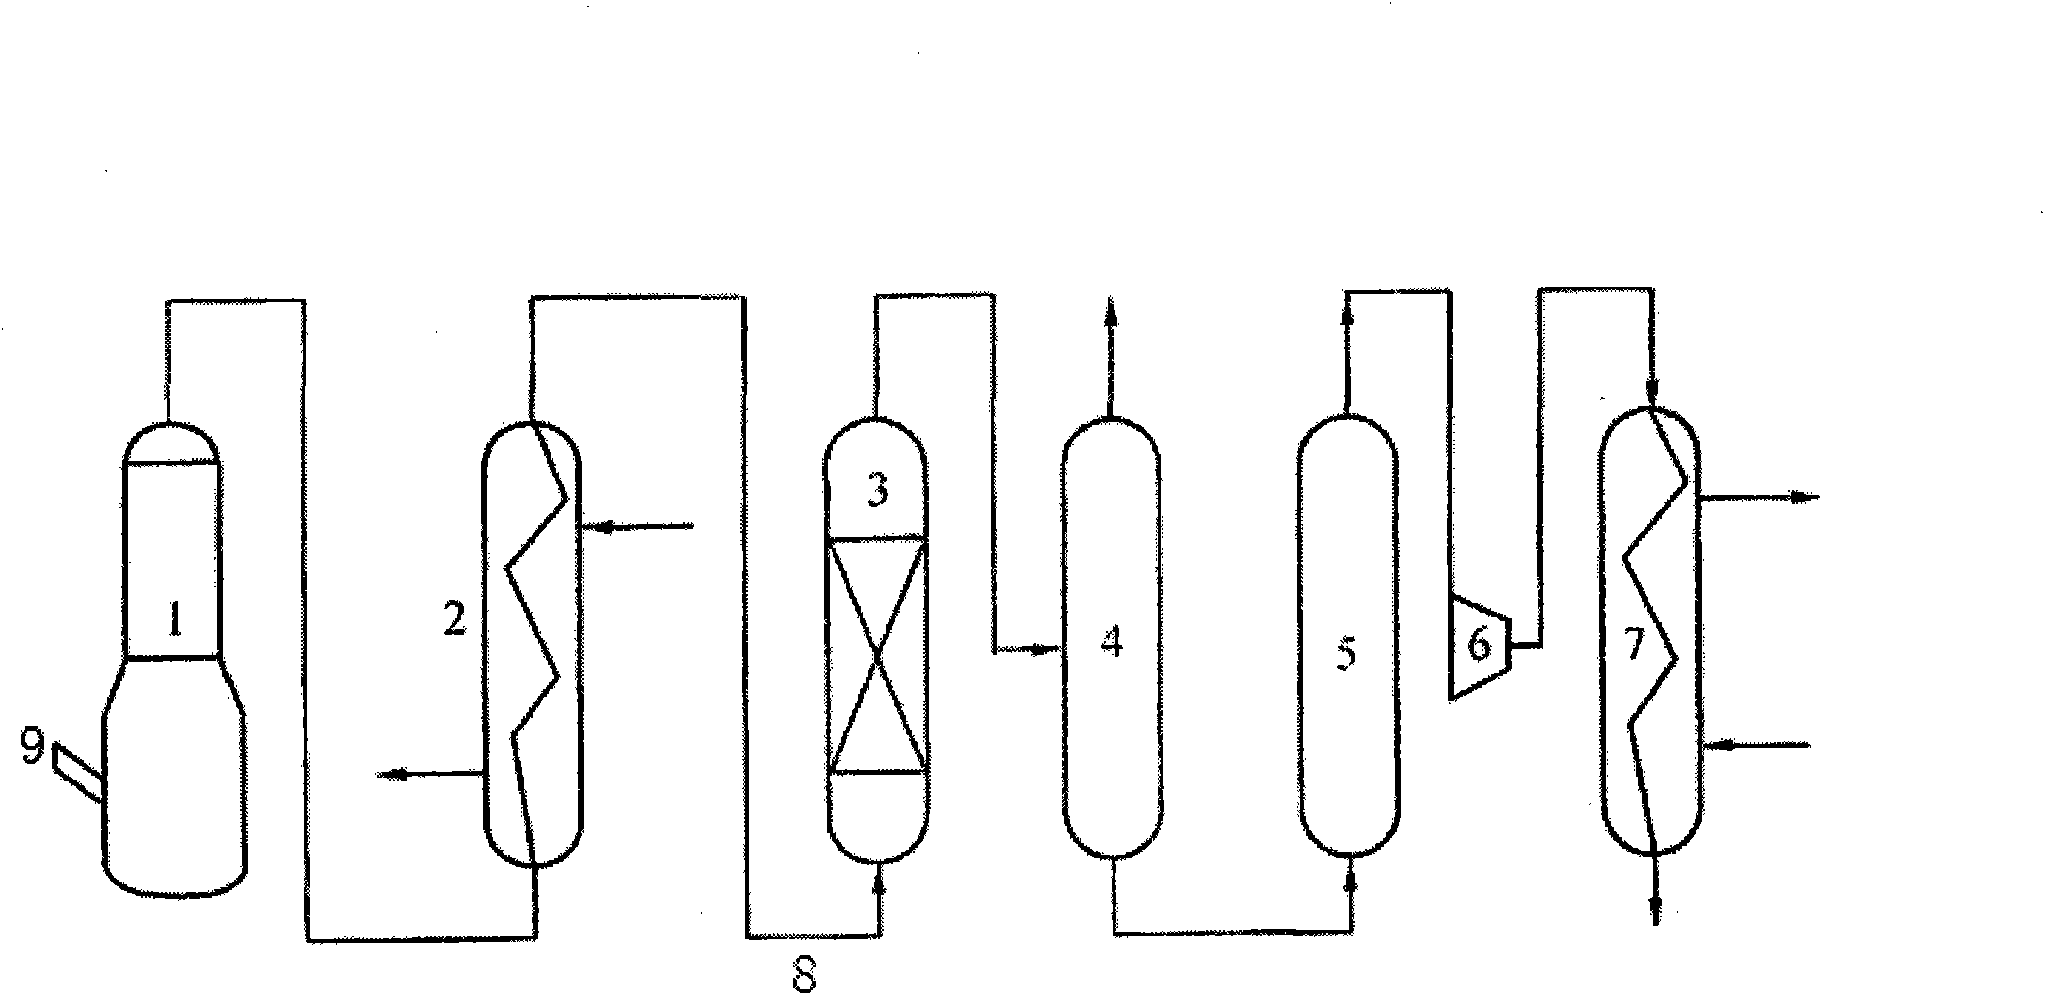 Technique for preparing nitrous oxide by decomposing ammonium nitrate